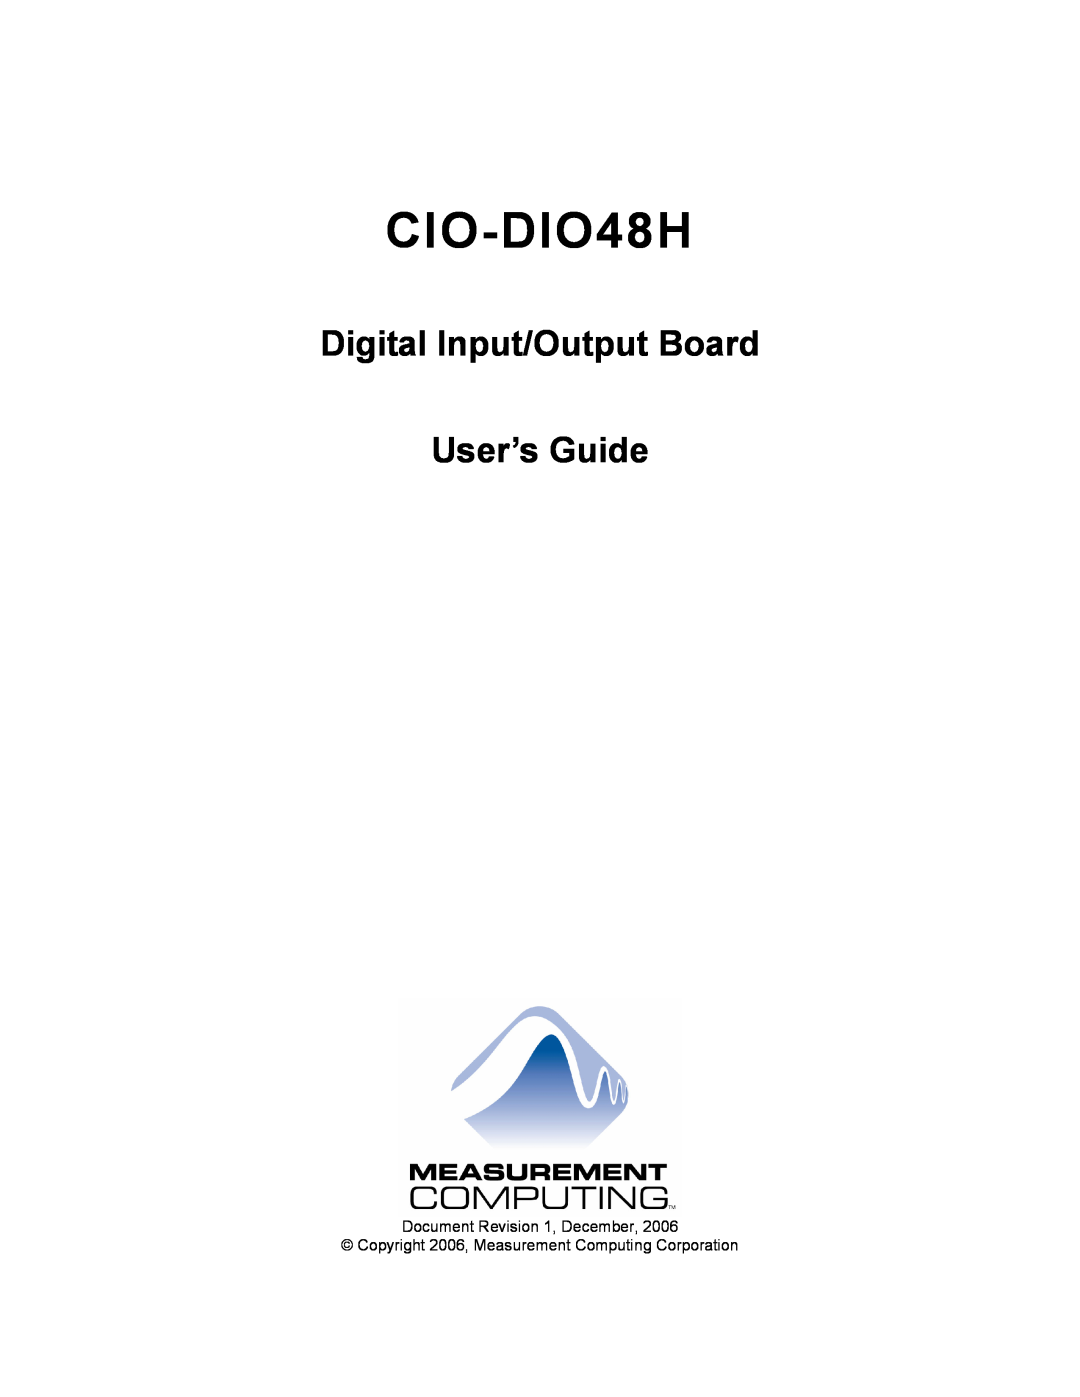 IBM CIO-DIO48H manual Digital Input/Output Board User’s Guide, Document Revision 1, December 